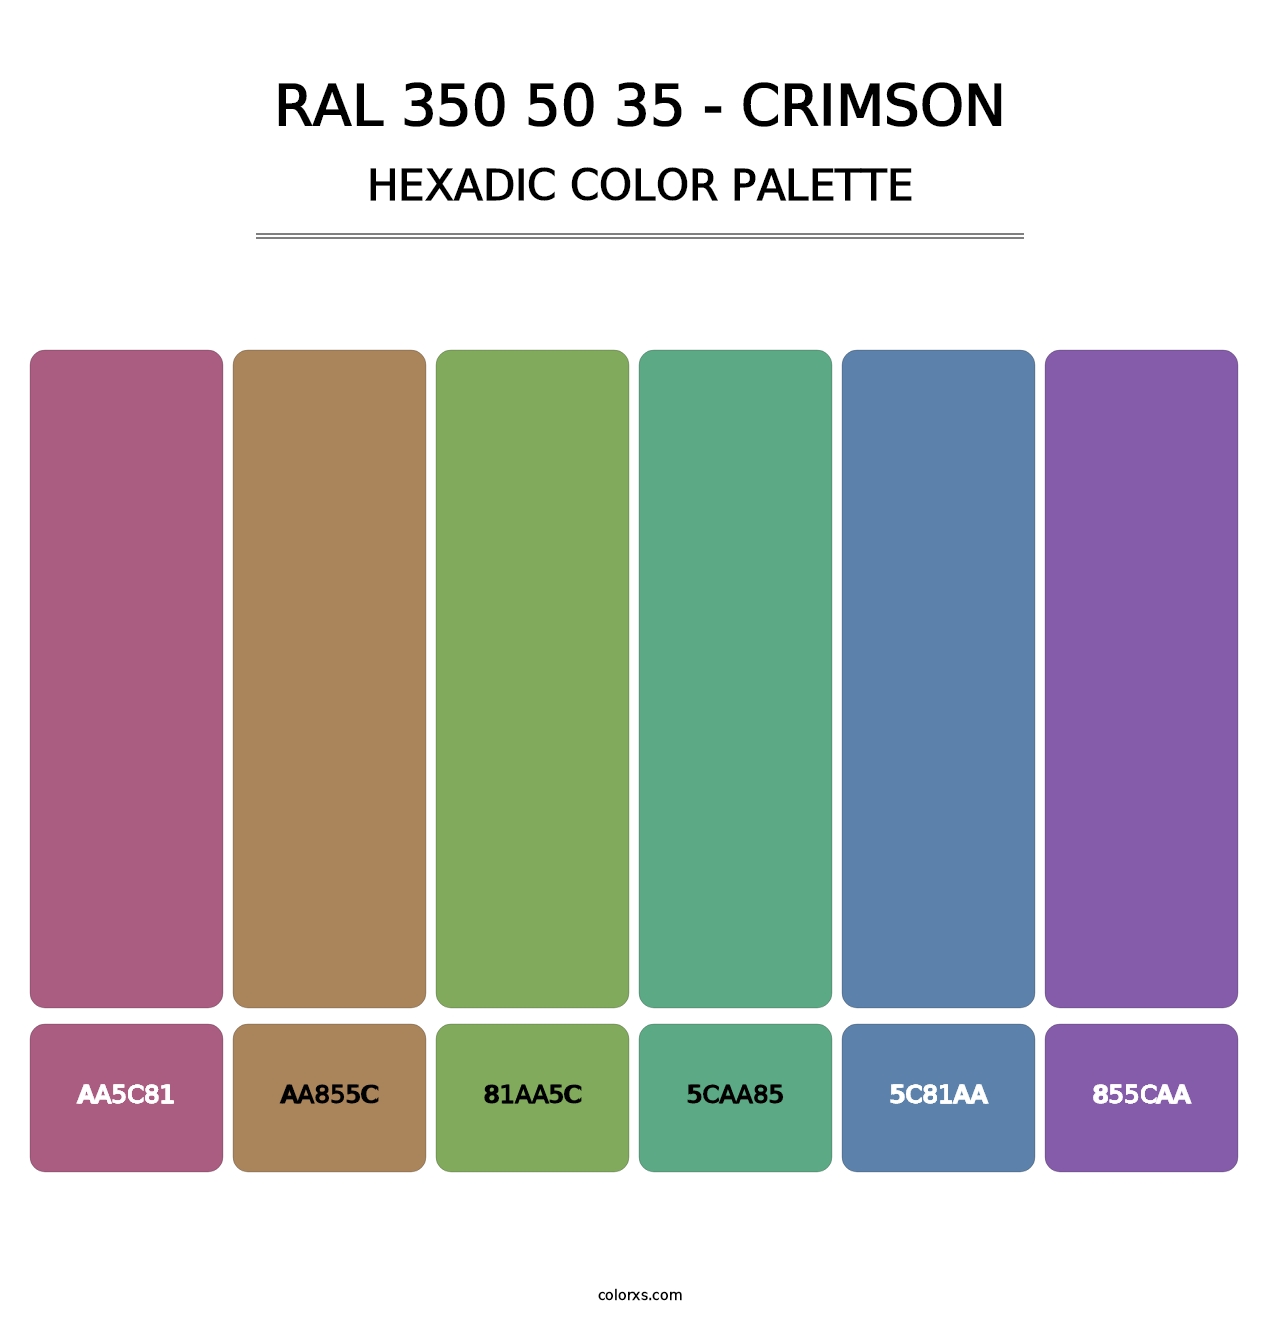 RAL 350 50 35 - Crimson - Hexadic Color Palette